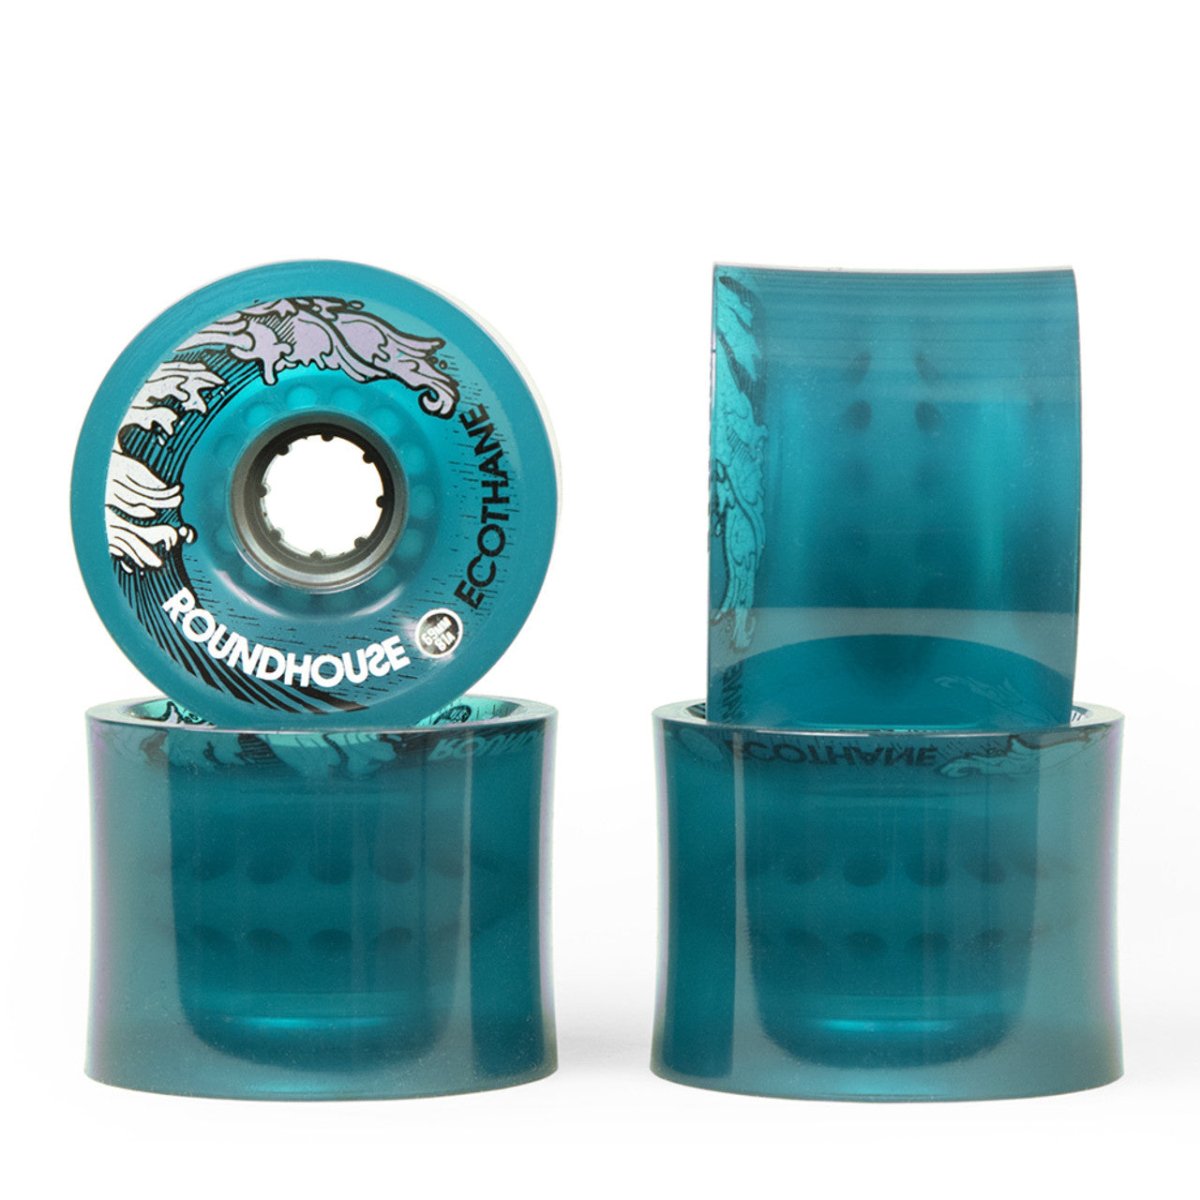 Carver 81a Roundhouse 69mm (Aqua Blue) - Skateboard - Wheels